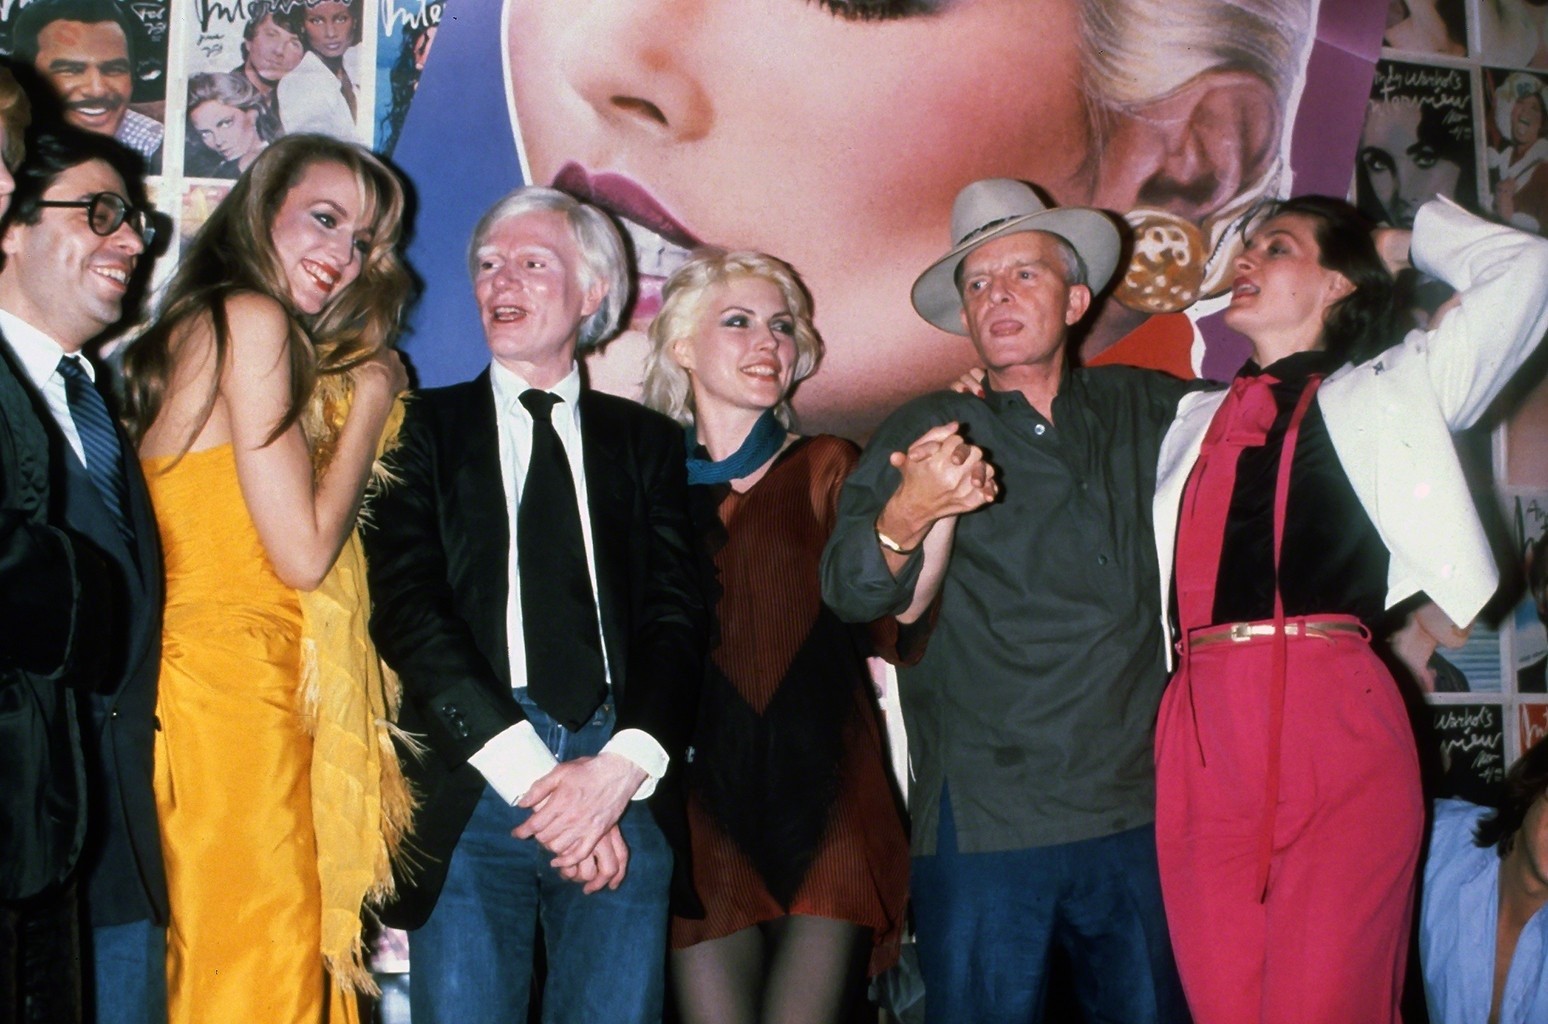 Джерри Холл, Энди Уорхол, Дебби Харри, Трумен Капоте и Палома Пикассо в Студия 54, примерно 1970 год